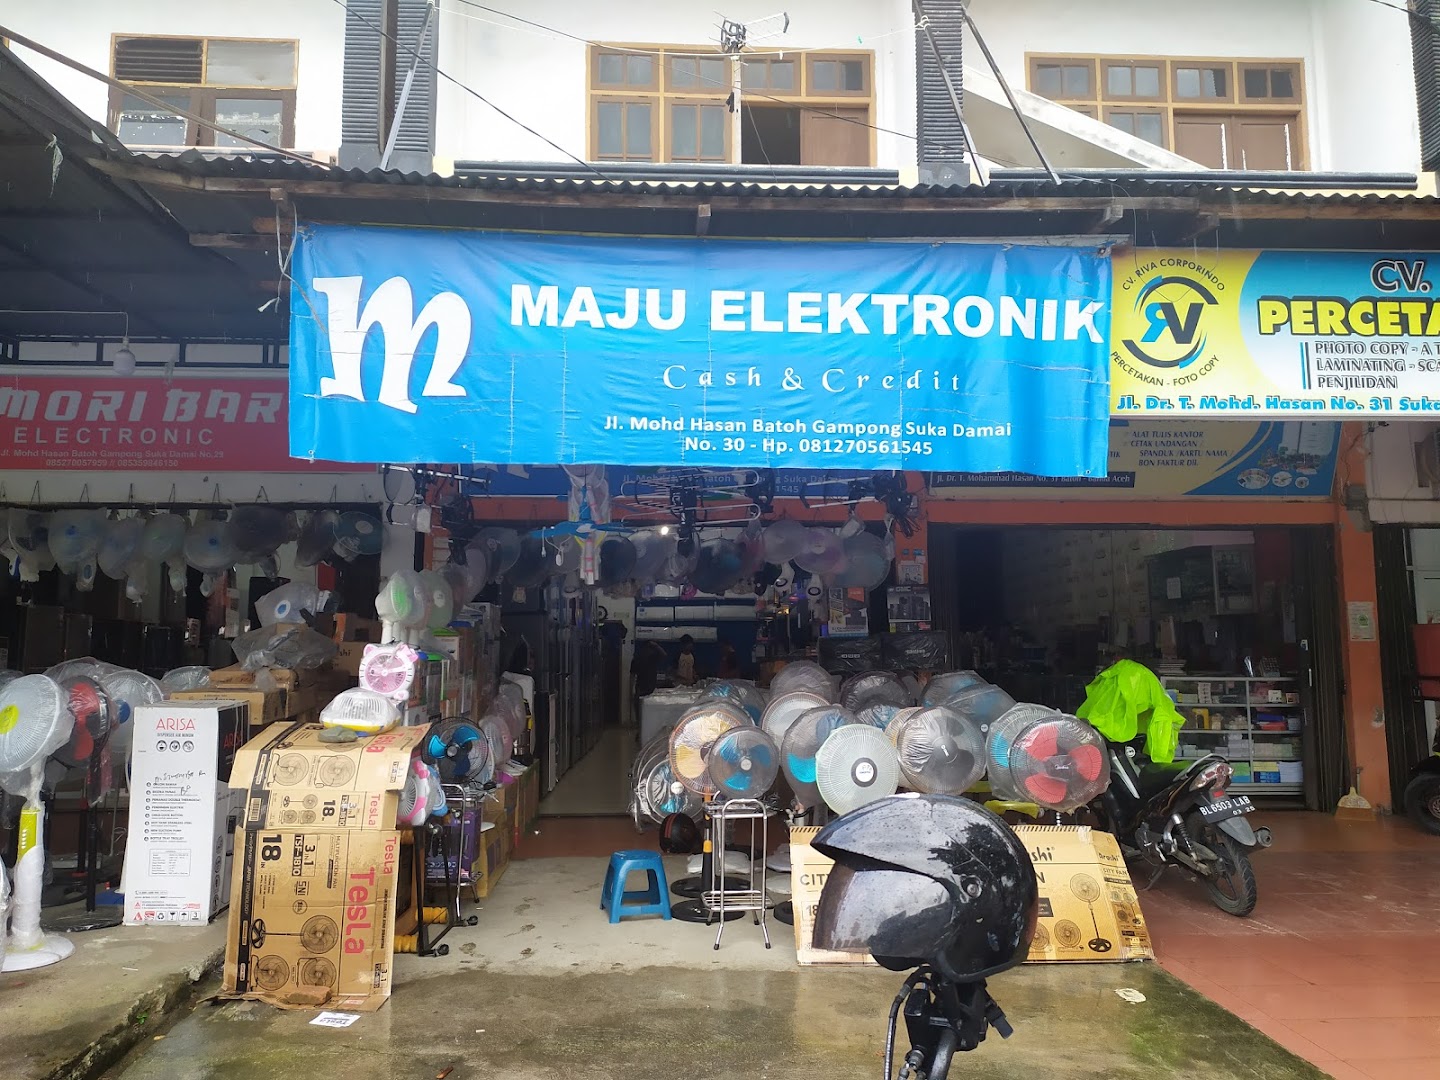 Gambar Maju Elektronik Lueng Bata Banda Aceh